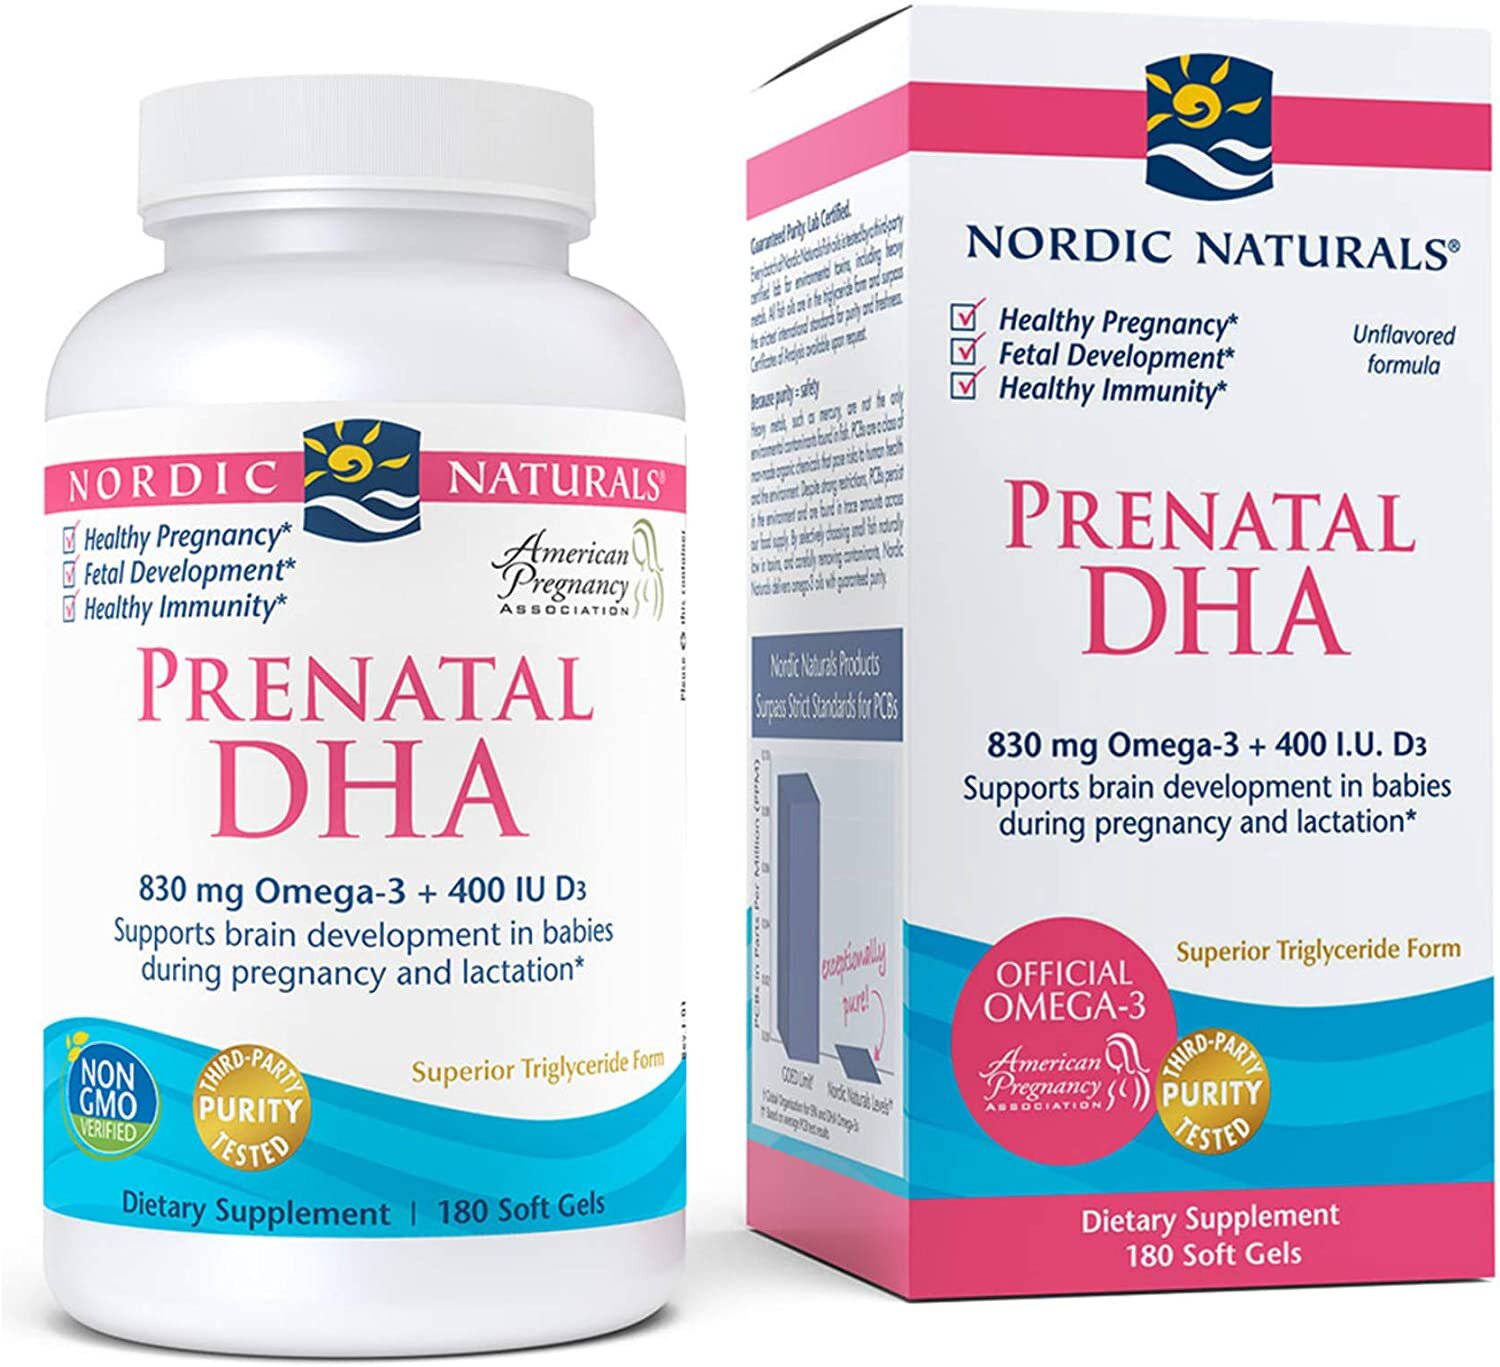 prenatal DHA